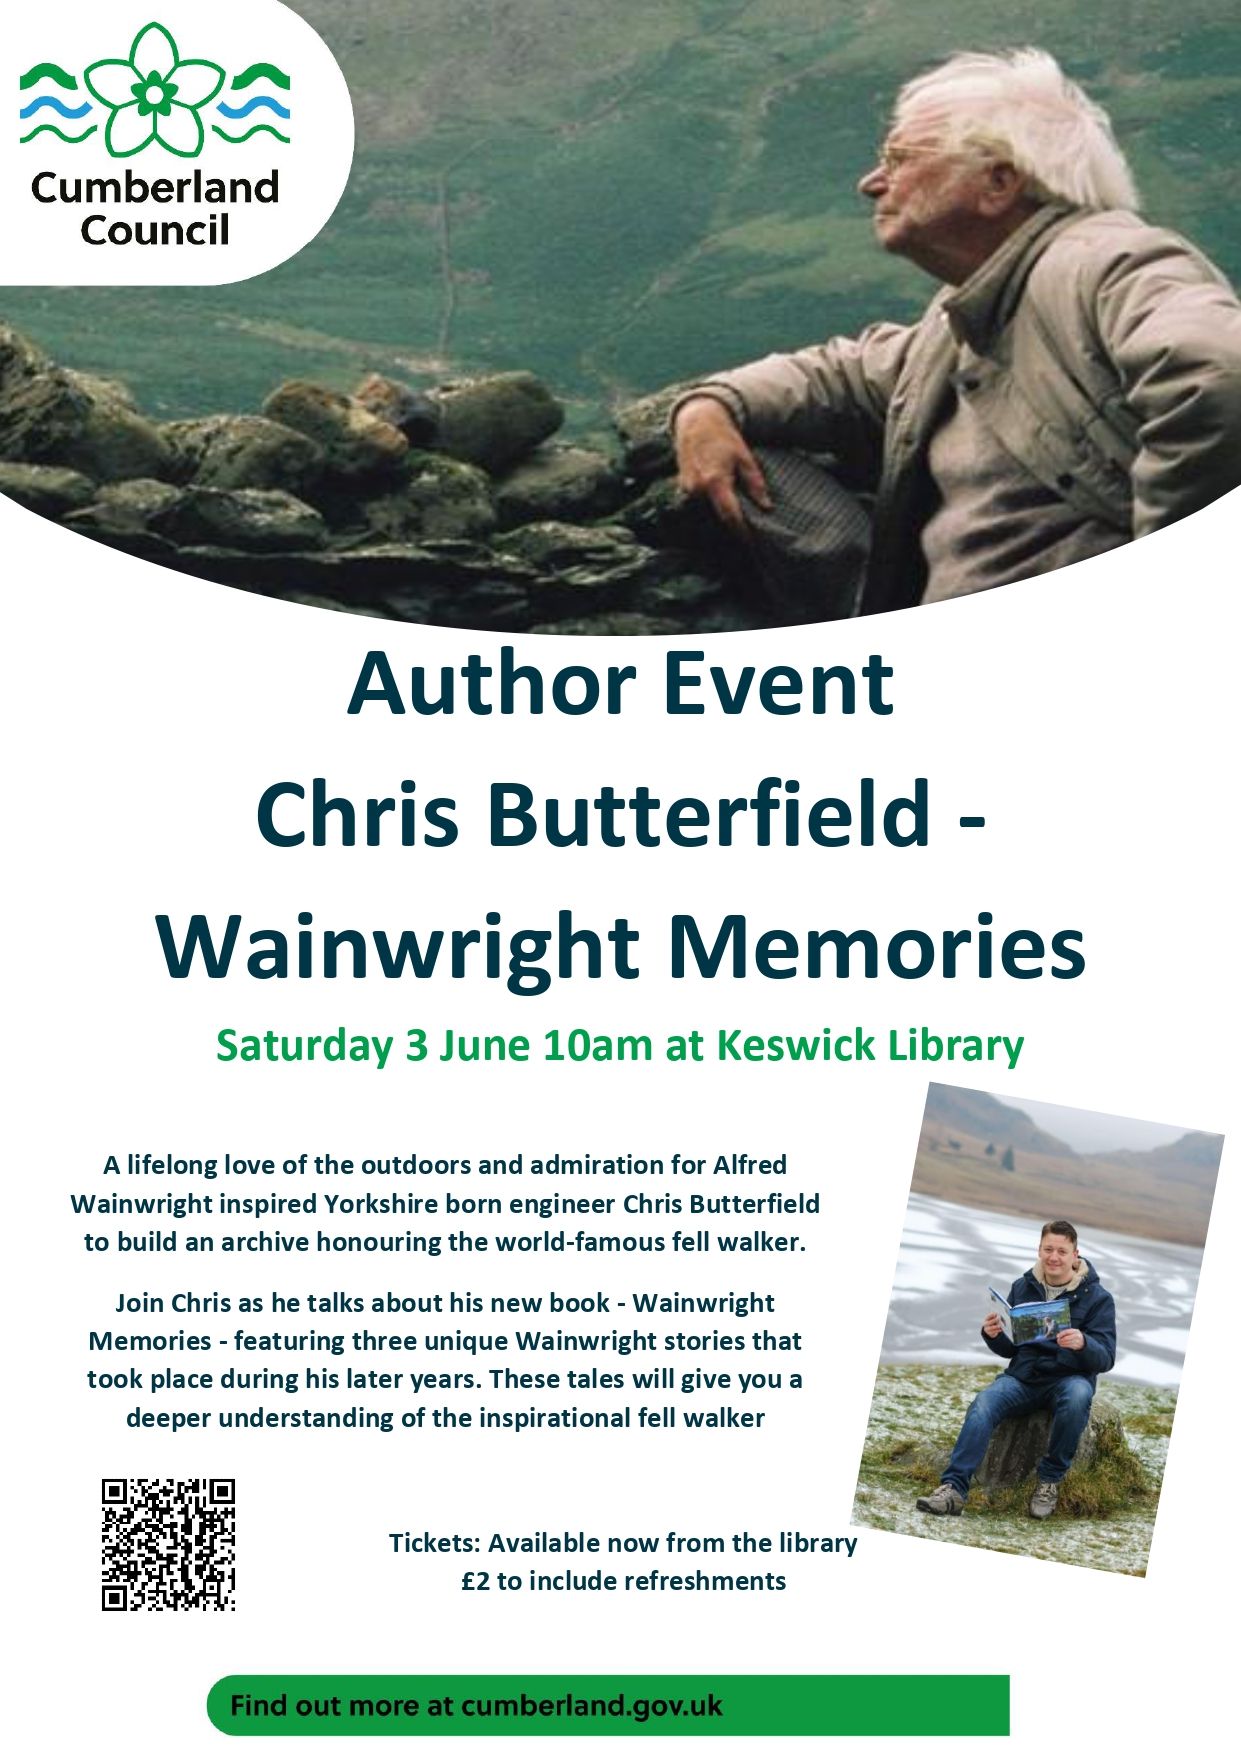 Author Event Chris Butterfield - Wainwright Memories